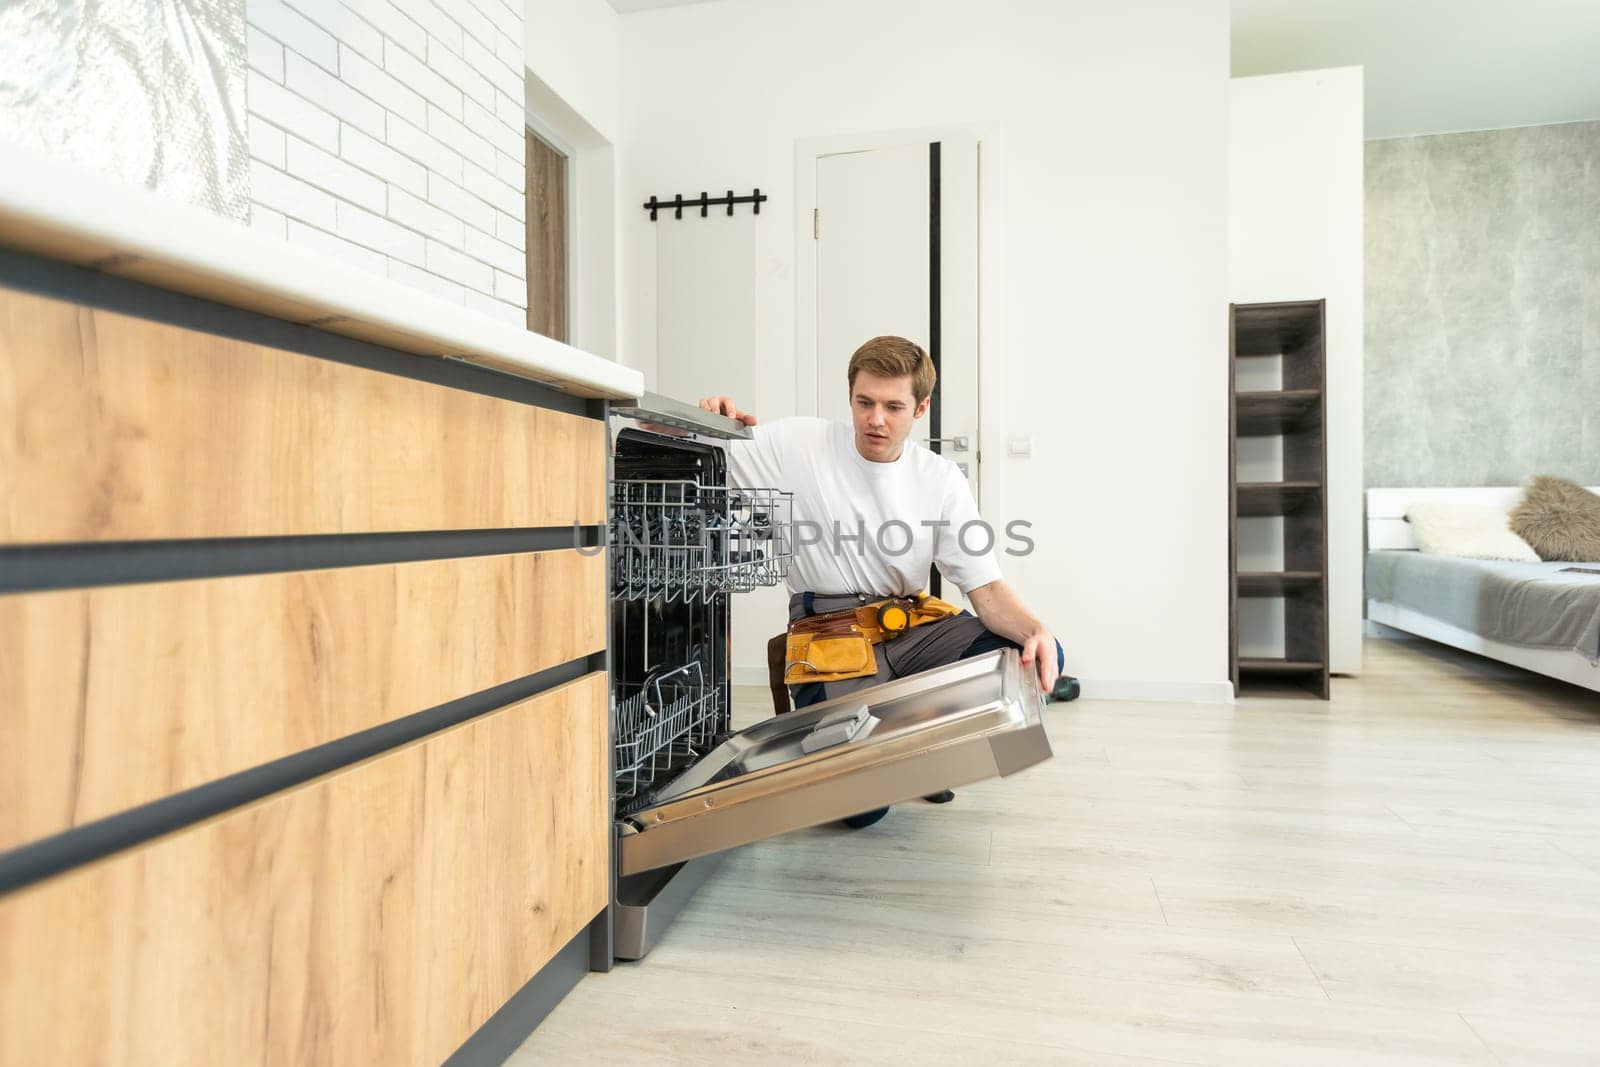 Repairman checks operating state of dishwasher in kitchen.